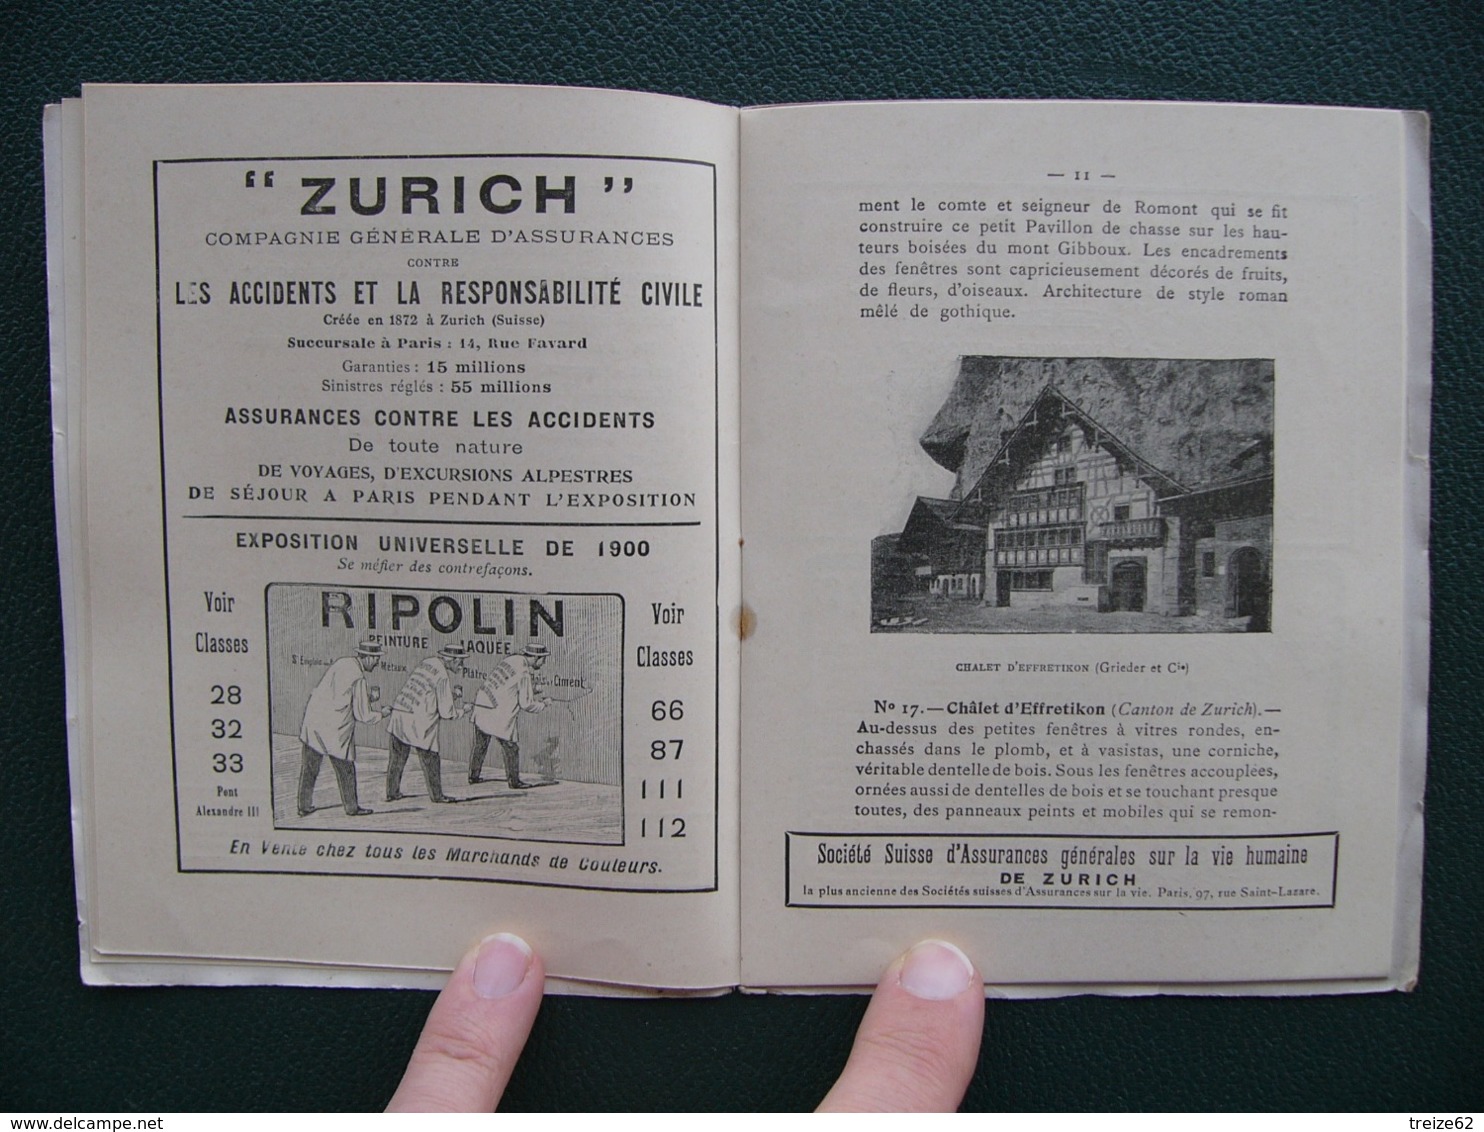 Livret Exposition Universelle 1900 Guide Du Village Suisse Pub : Picon Ripolin Nestlé Kohler - Reiseprospekte